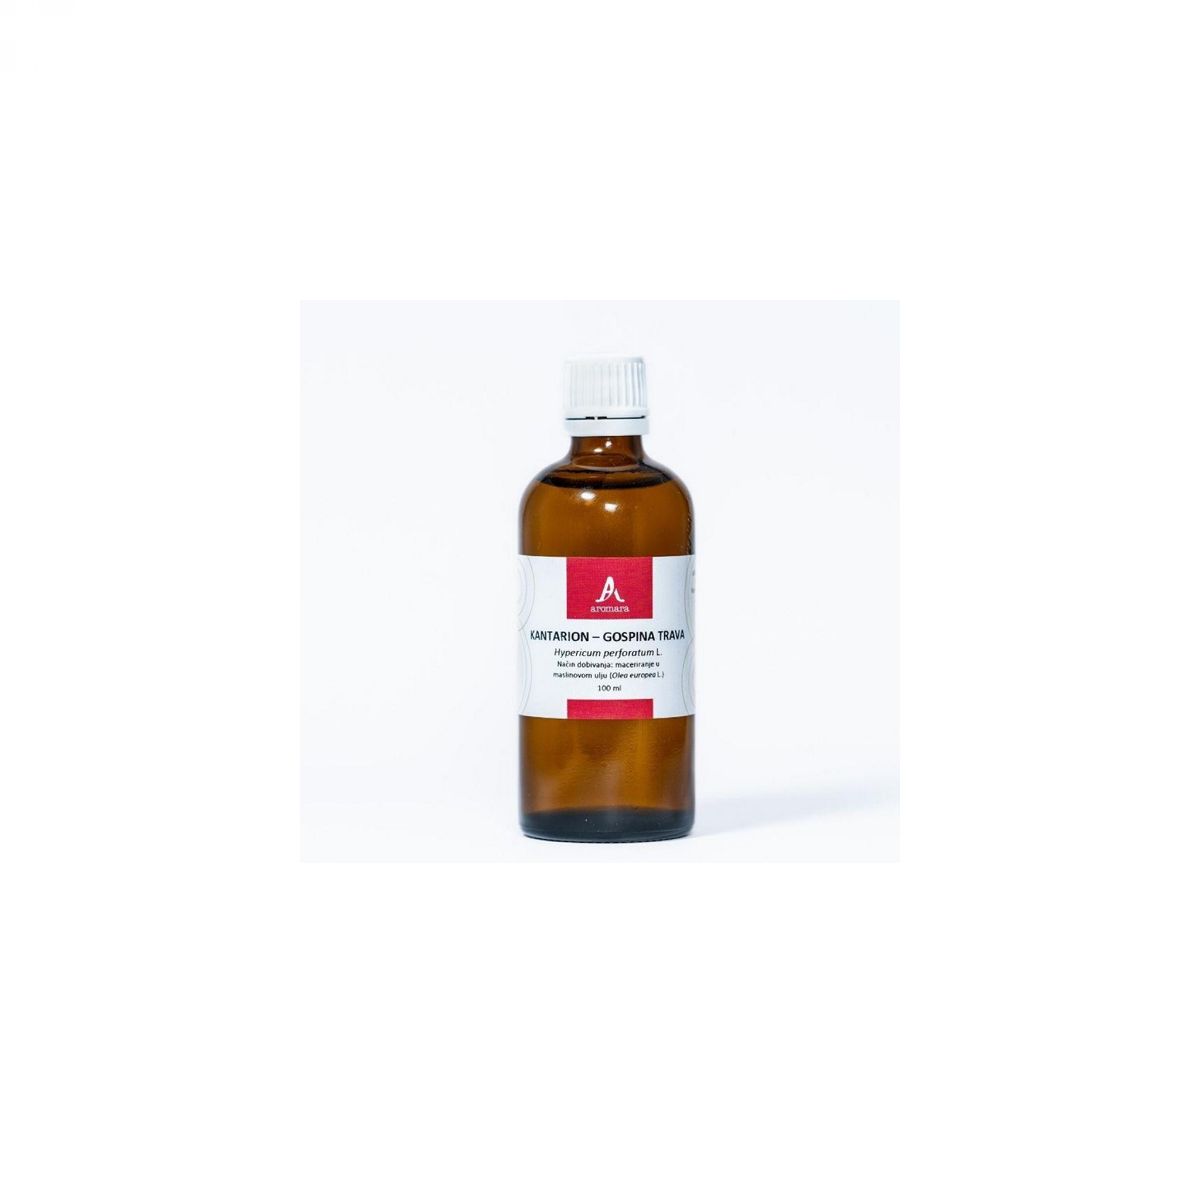 Šentjanževo olje (Hypericum perforatum) -  macerat, 100 ml -  AROMARA